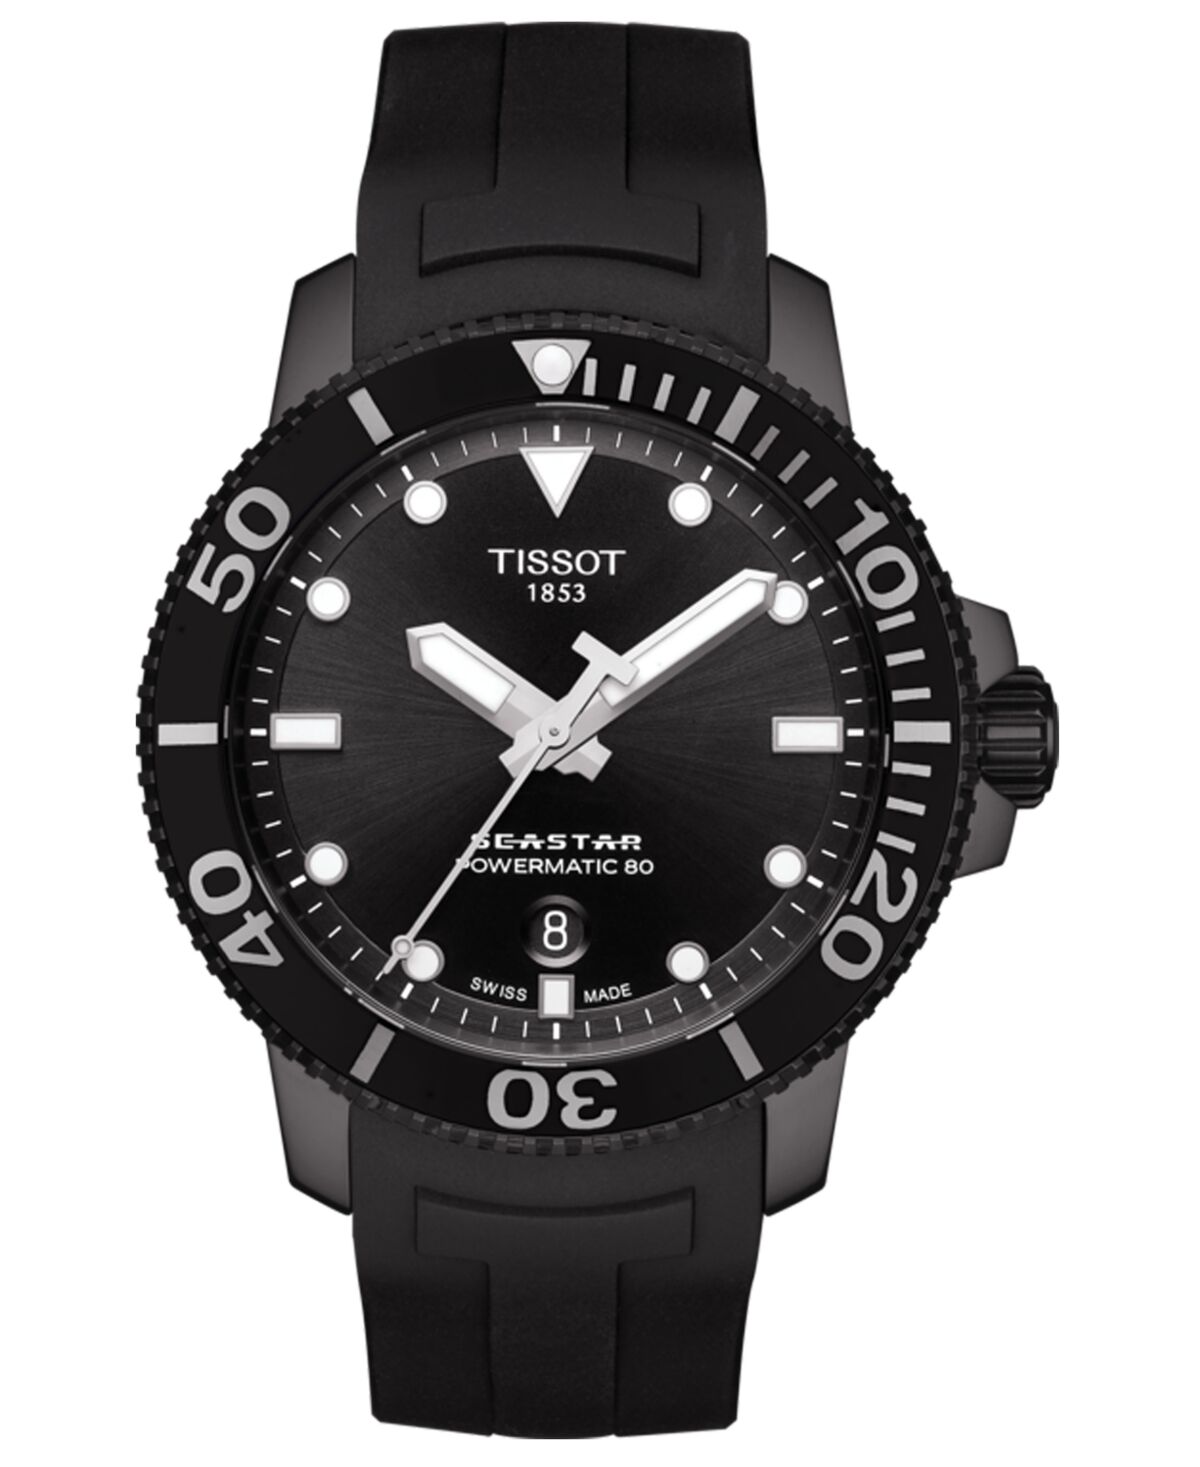 Tissot Men's Swiss Automatic SeaStar Black Rubber Strap Diver Watch 43mm - Black